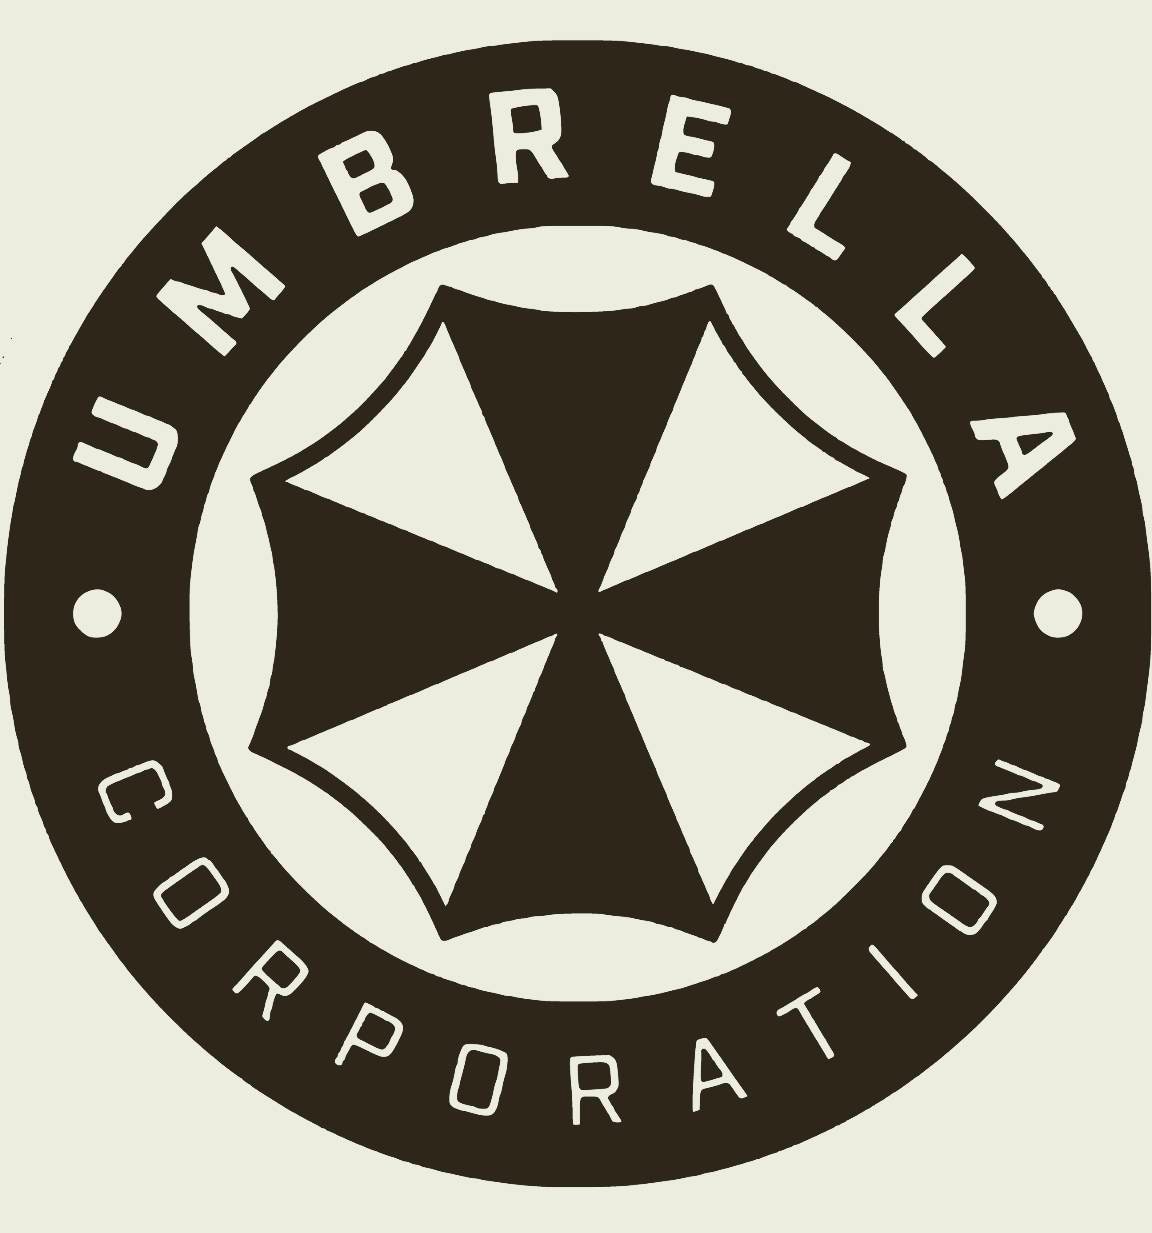 Large Umbrella Corporation Logo Resident Evil Vinyl Decal Sticker 10H x  10W